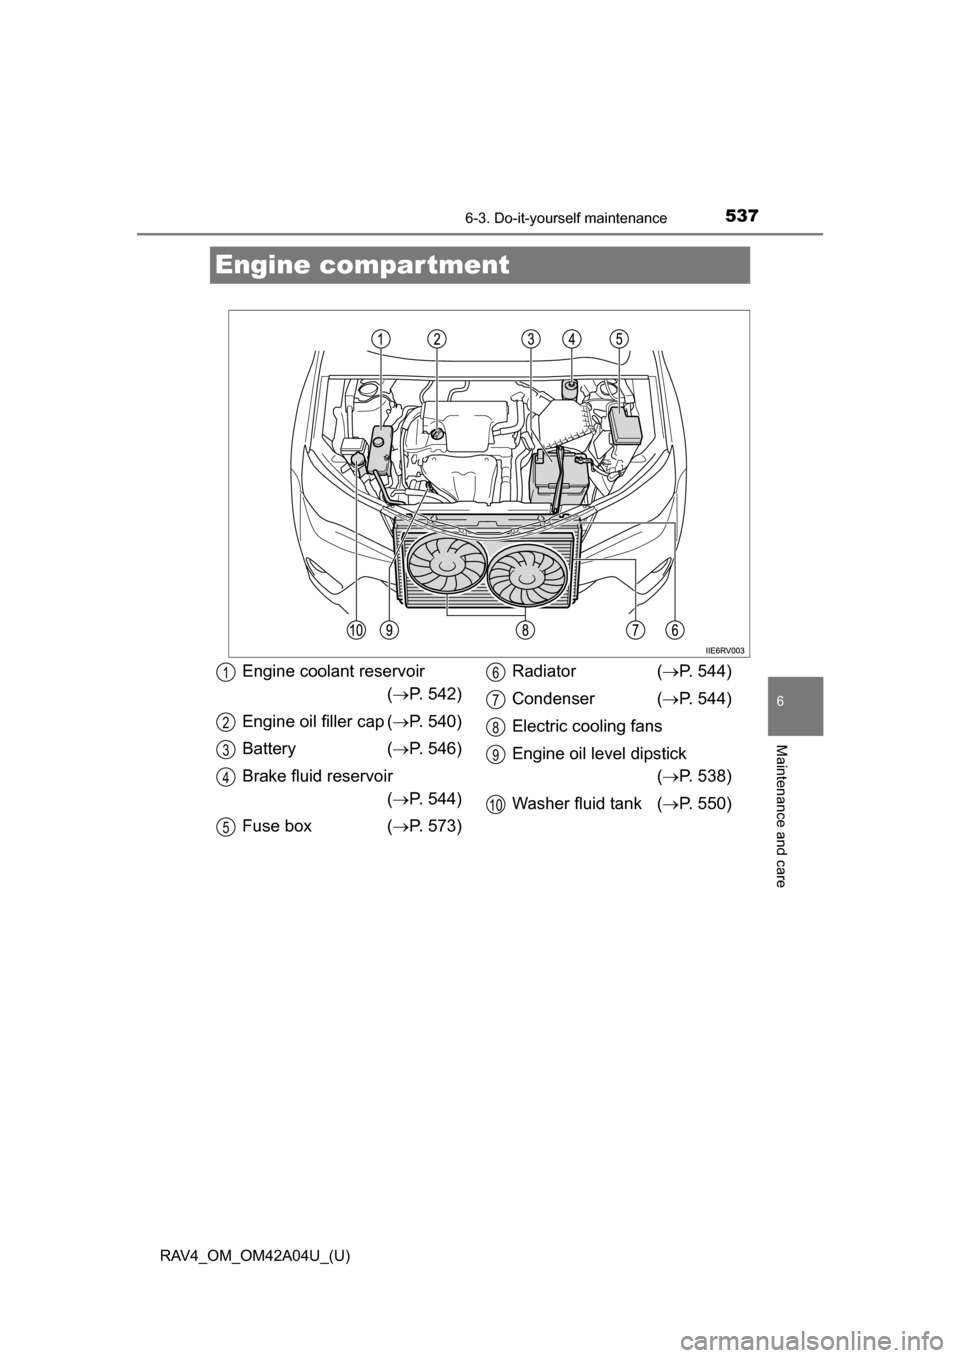 TOYOTA RAV4 2014 XA40 / 4.G Owners Manual 537
RAV4_OM_OM42A04U_(U)
6-3. Do-it-yourself maintenance
6
Maintenance and care
Engine compar tment
Engine coolant reservoir ( P. 542)
Engine oil filler cap ( P. 540)
Battery ( P. 546)
Brake 